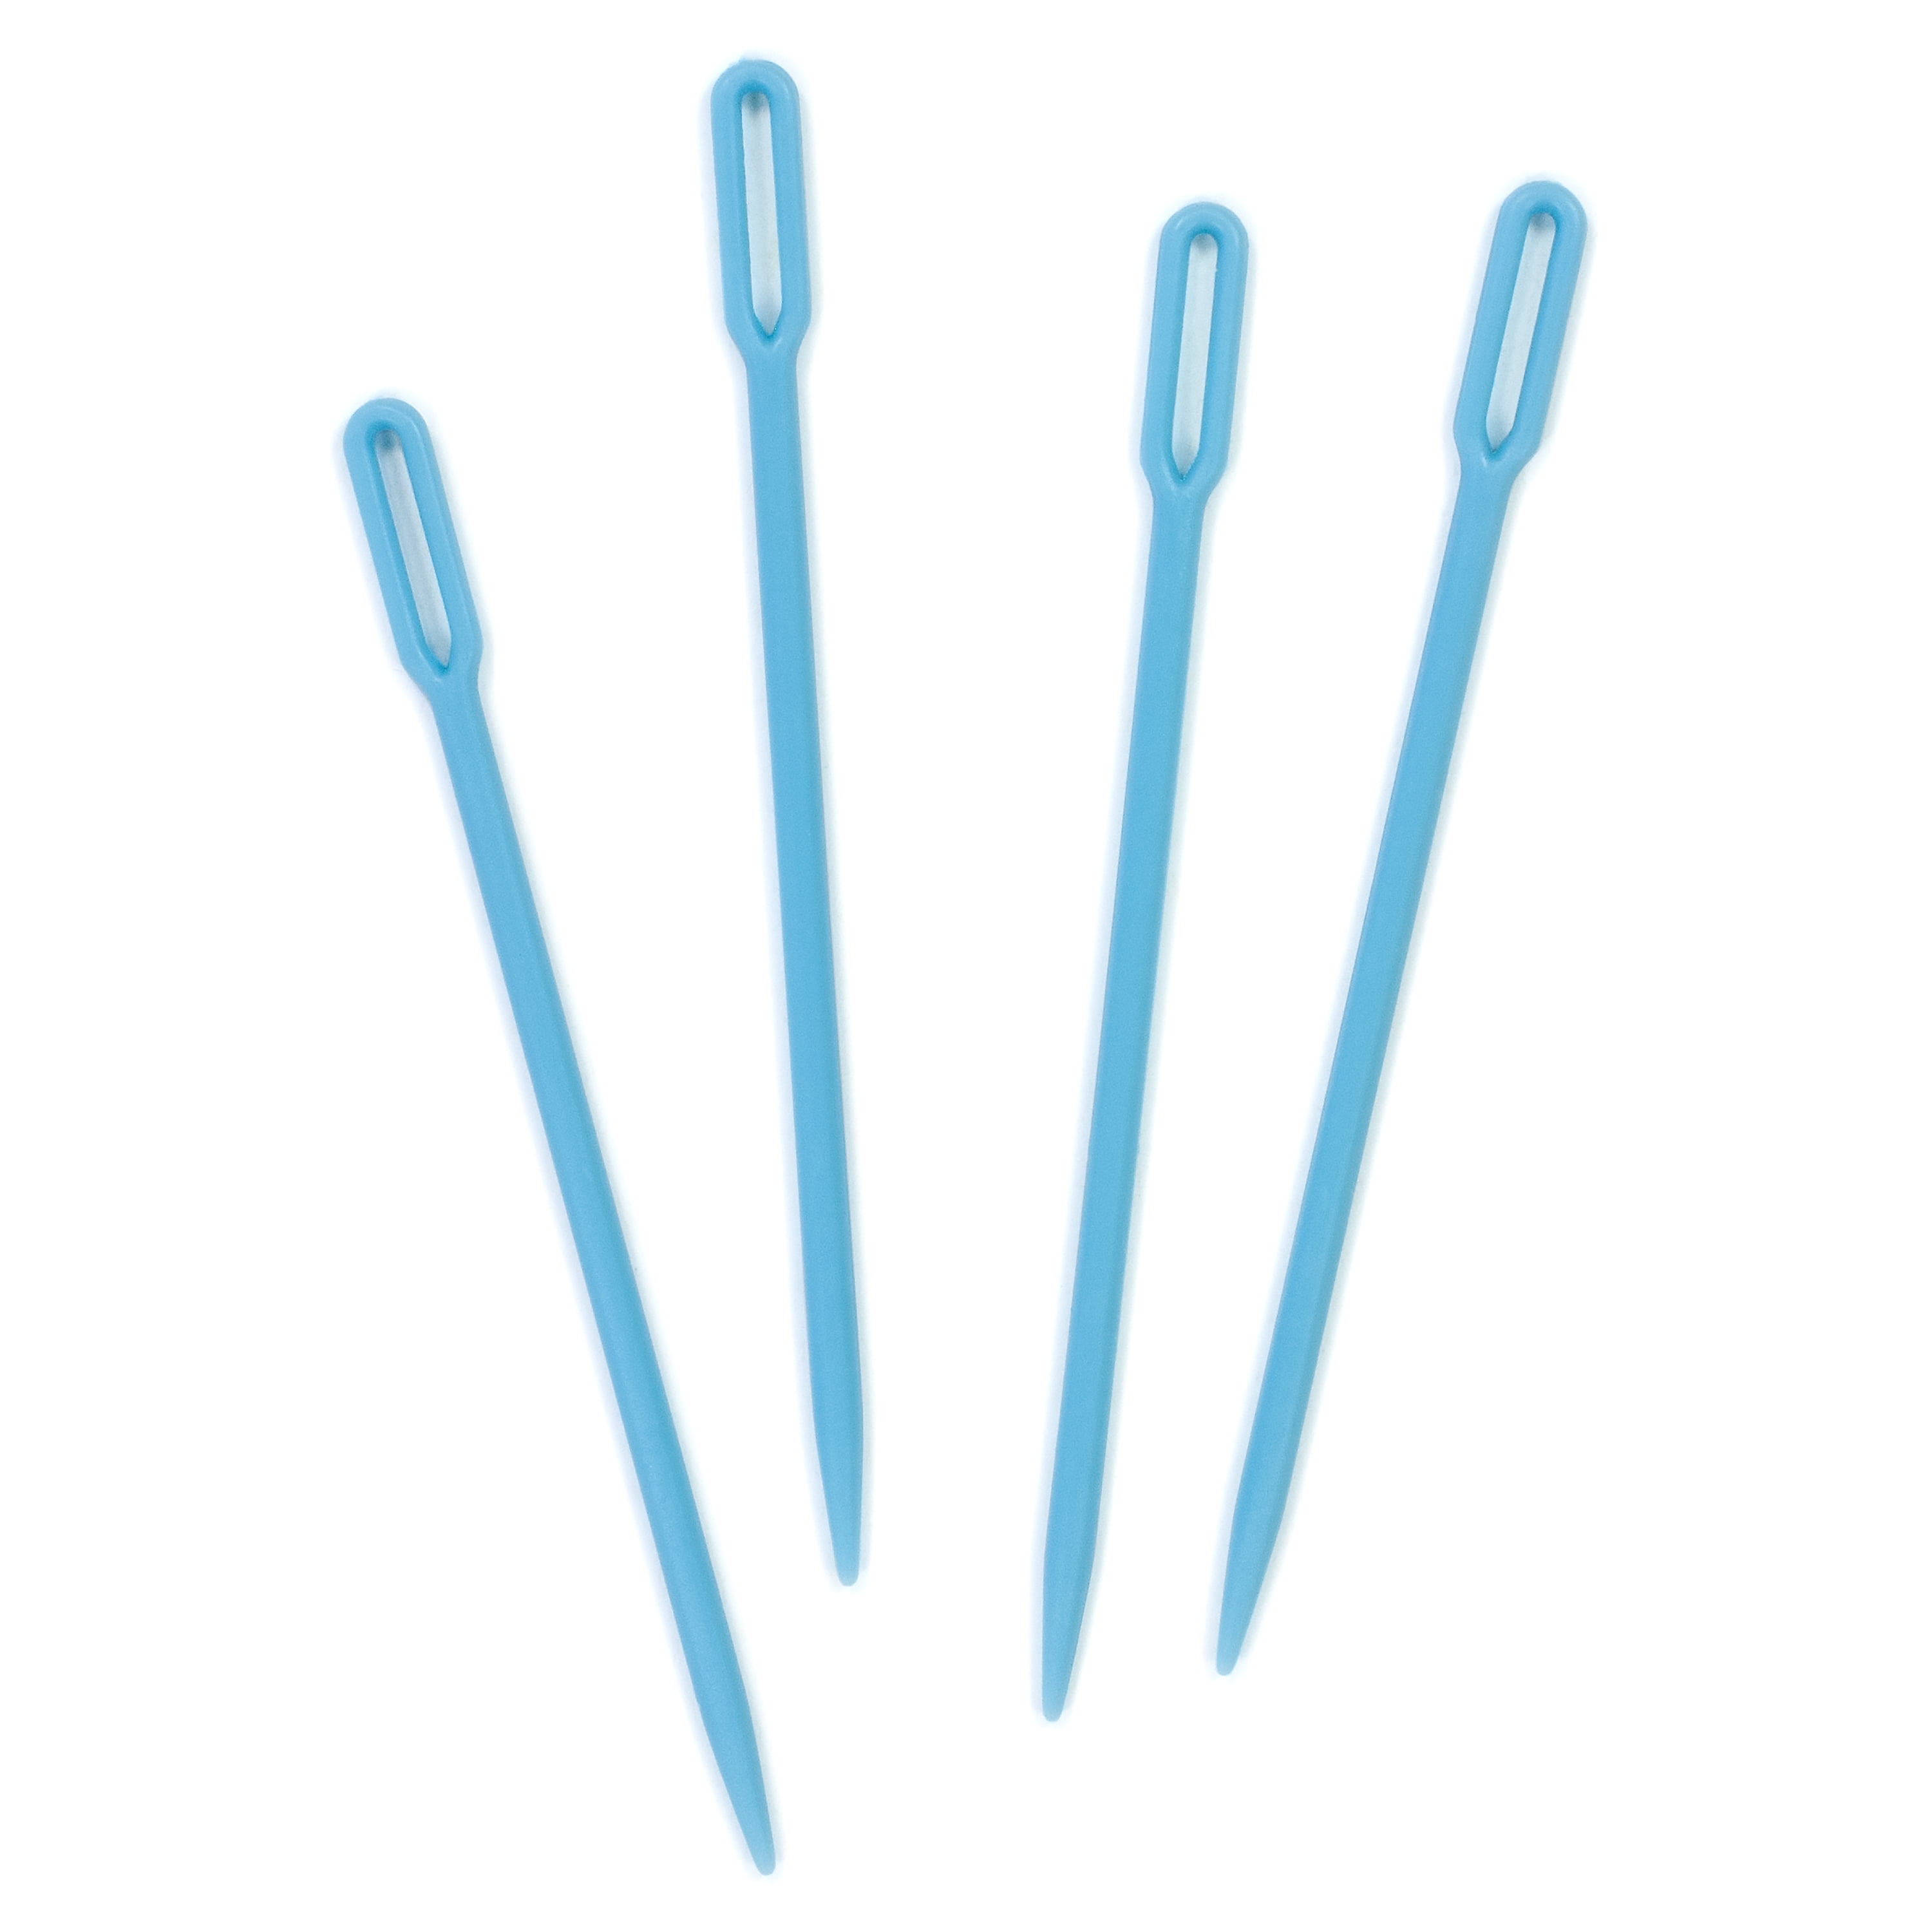  Boye Plastic Yarn Sewing Needle Set, 2pc,blue